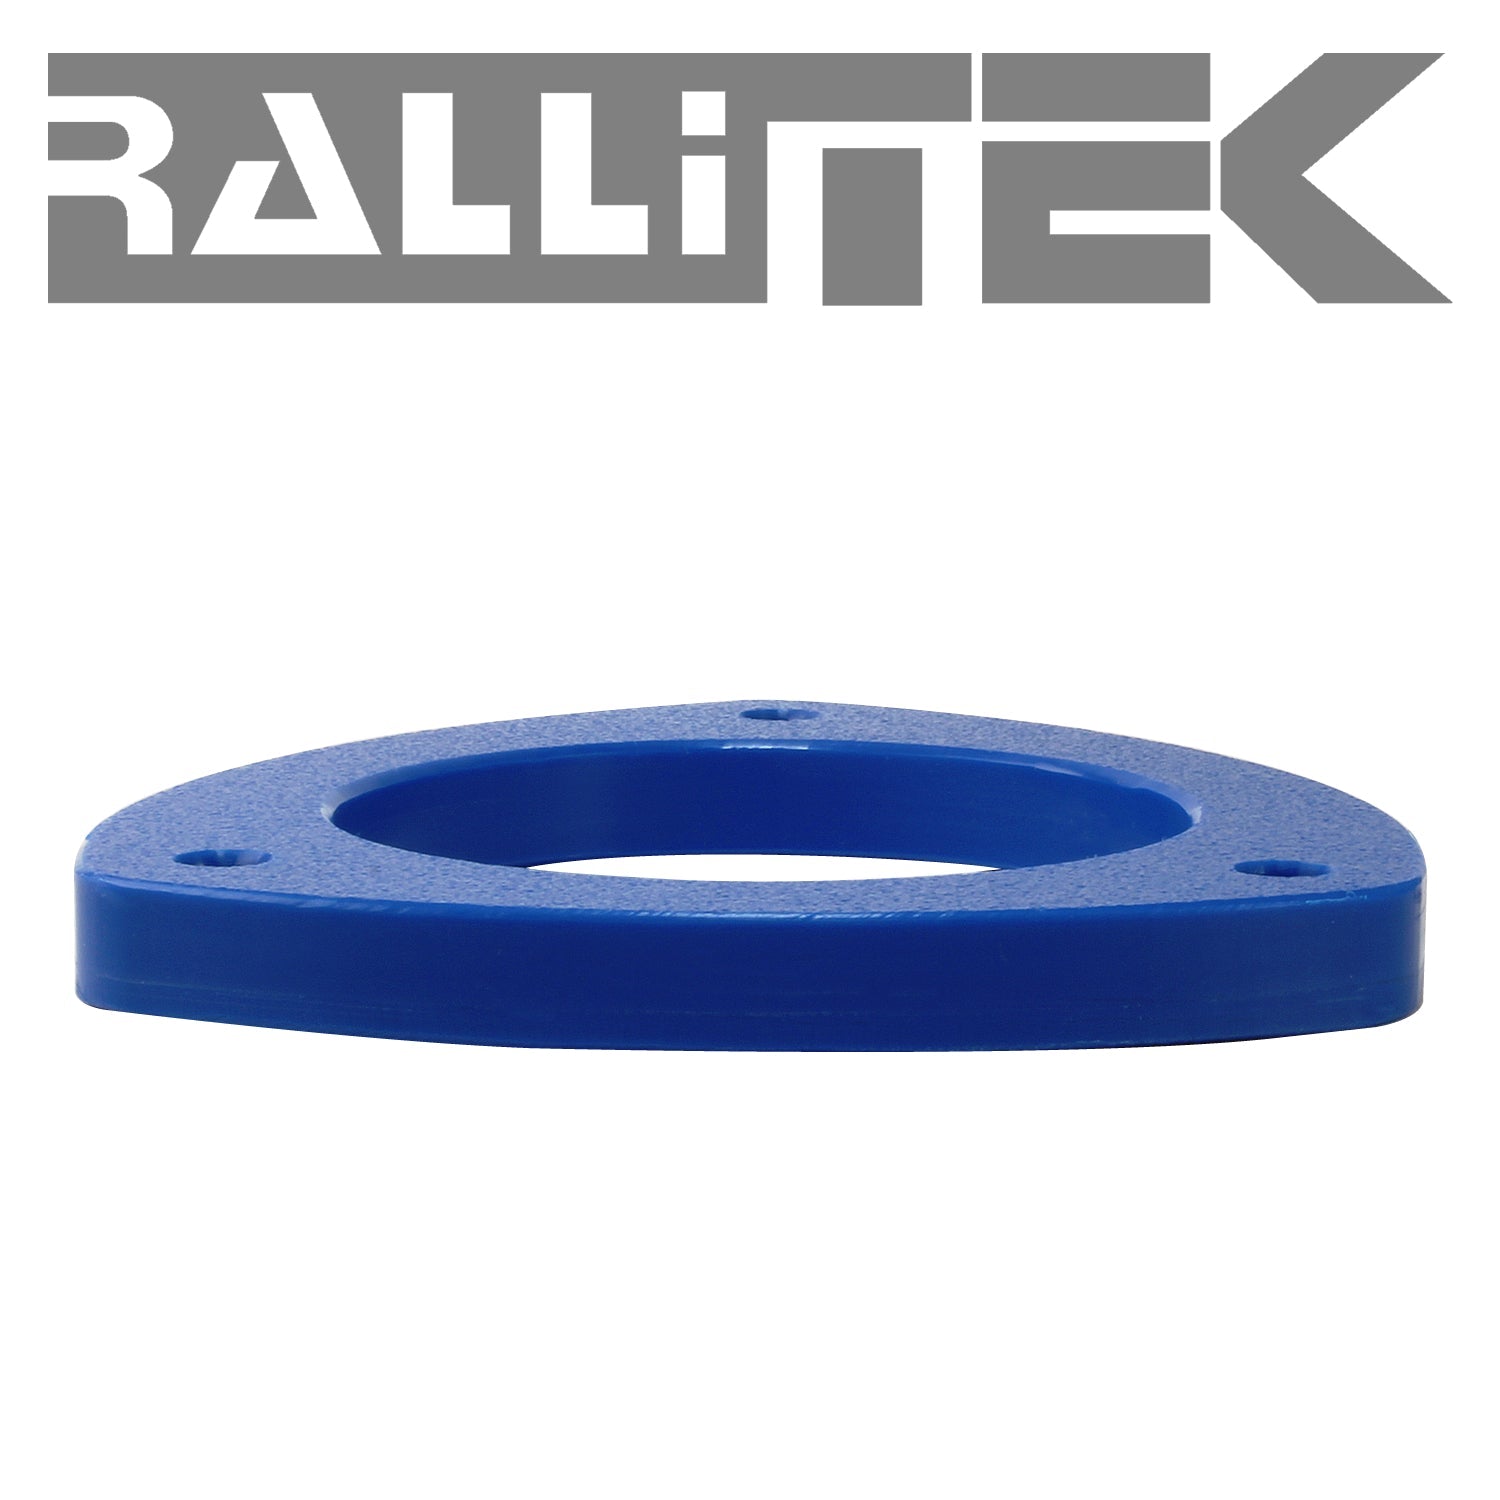 RalliTEK 0.5" Rear Lift Kit Spacers - All Impreza 2002-2007 / Forester 1998-2008 / Legacy 1995-1999